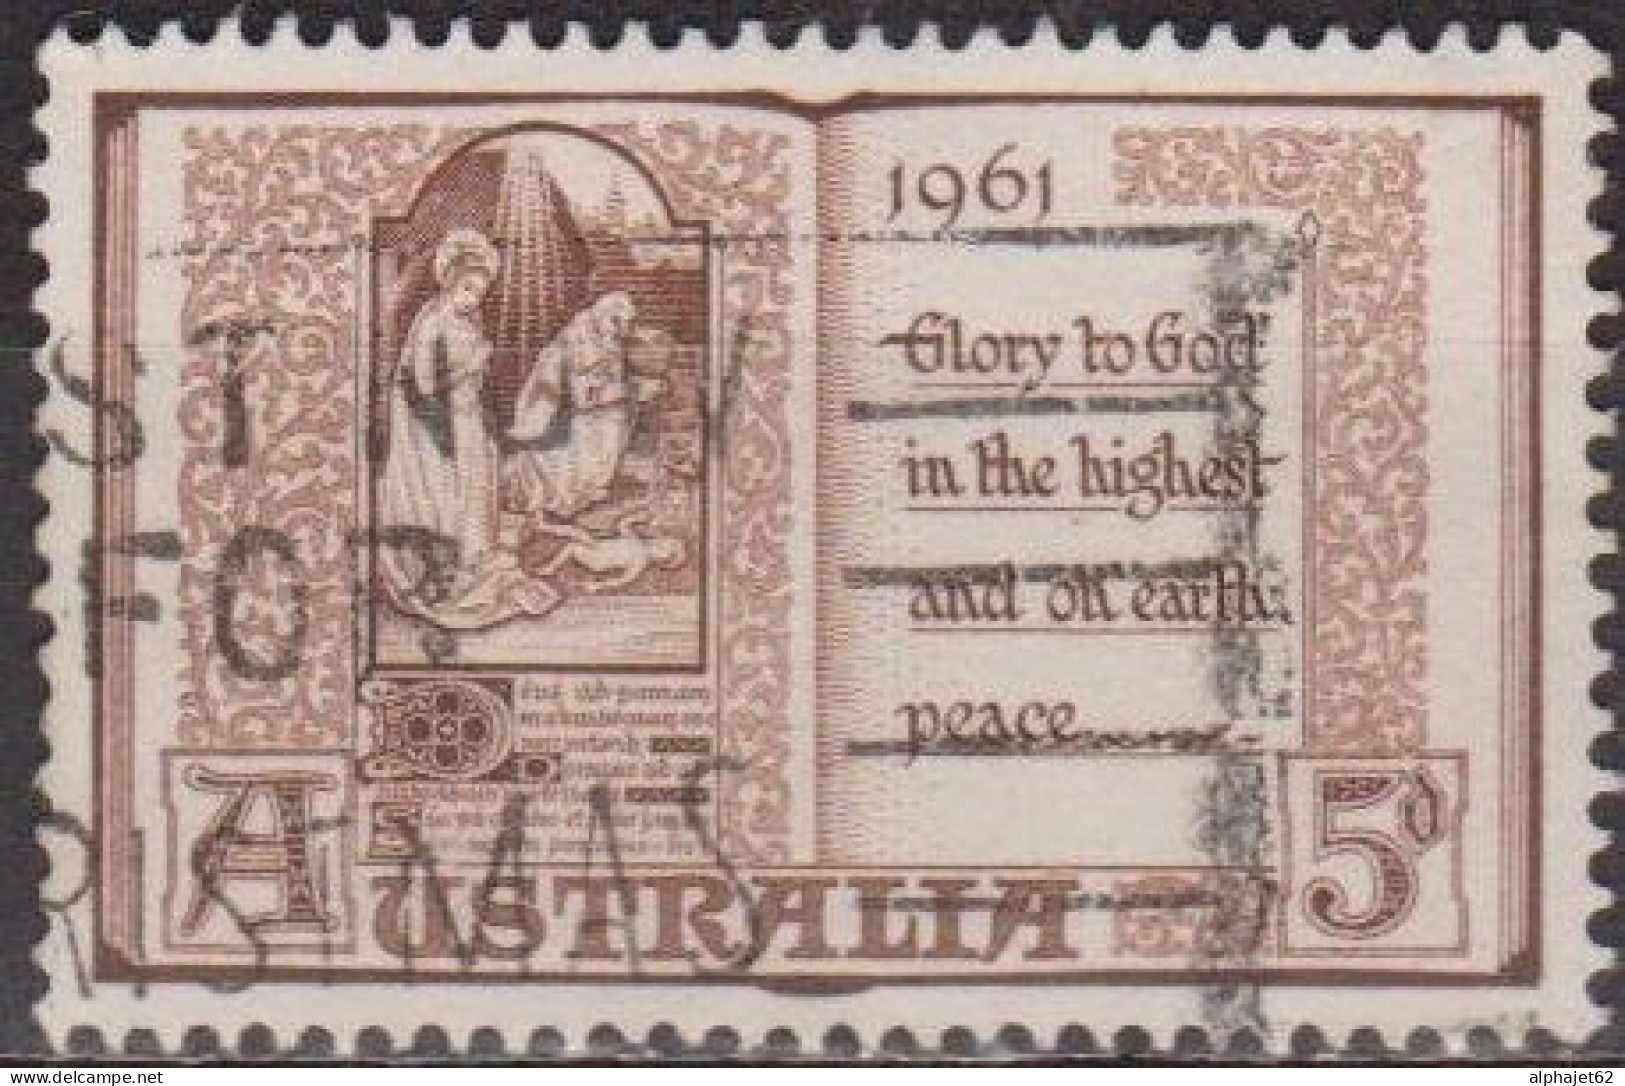 Noel - AUSTRALIE - Livre De Prière - N° 276 - 1961 - Used Stamps